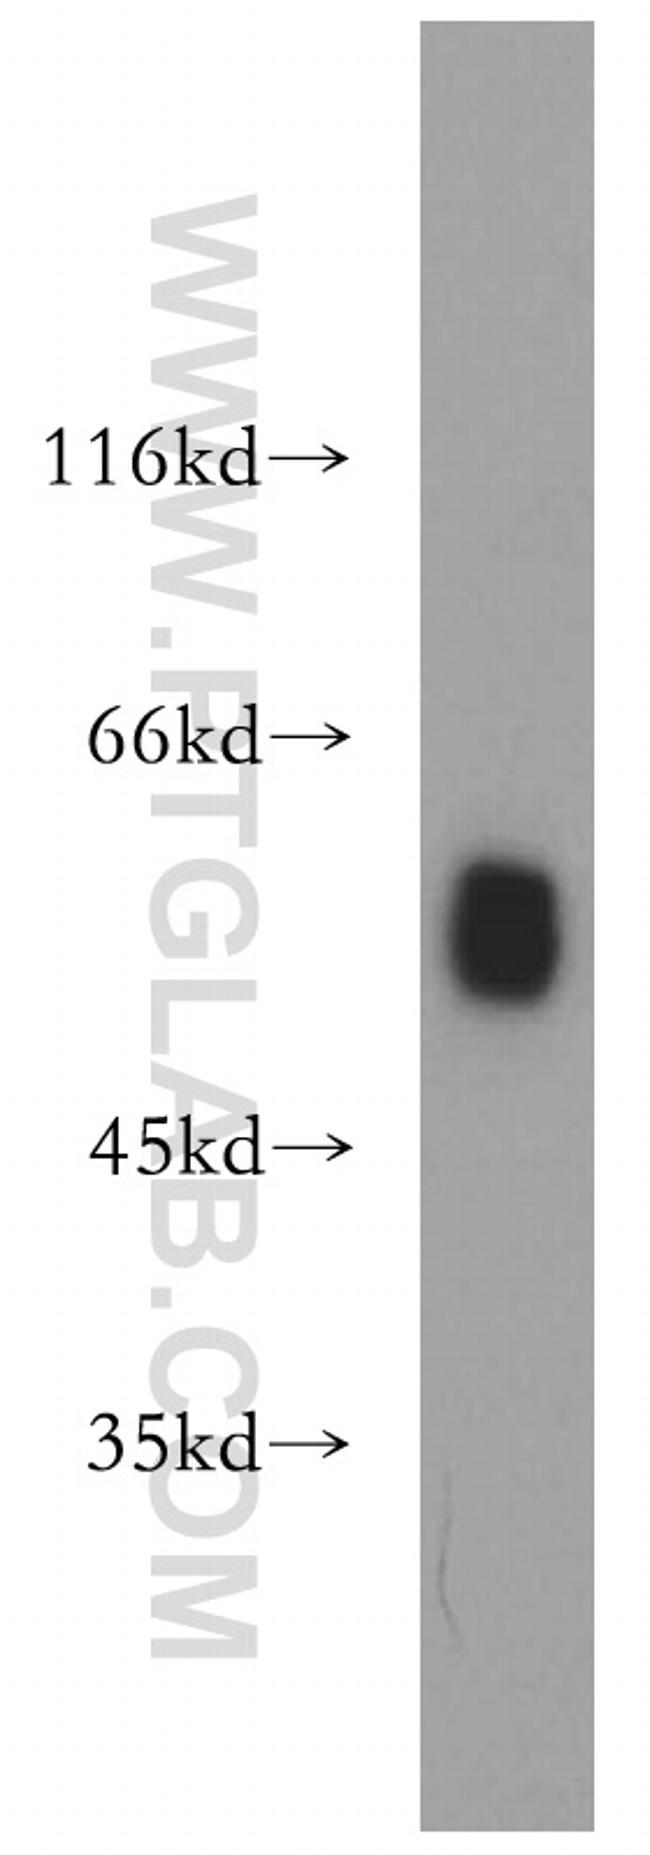 CSTF1 Antibody in Western Blot (WB)